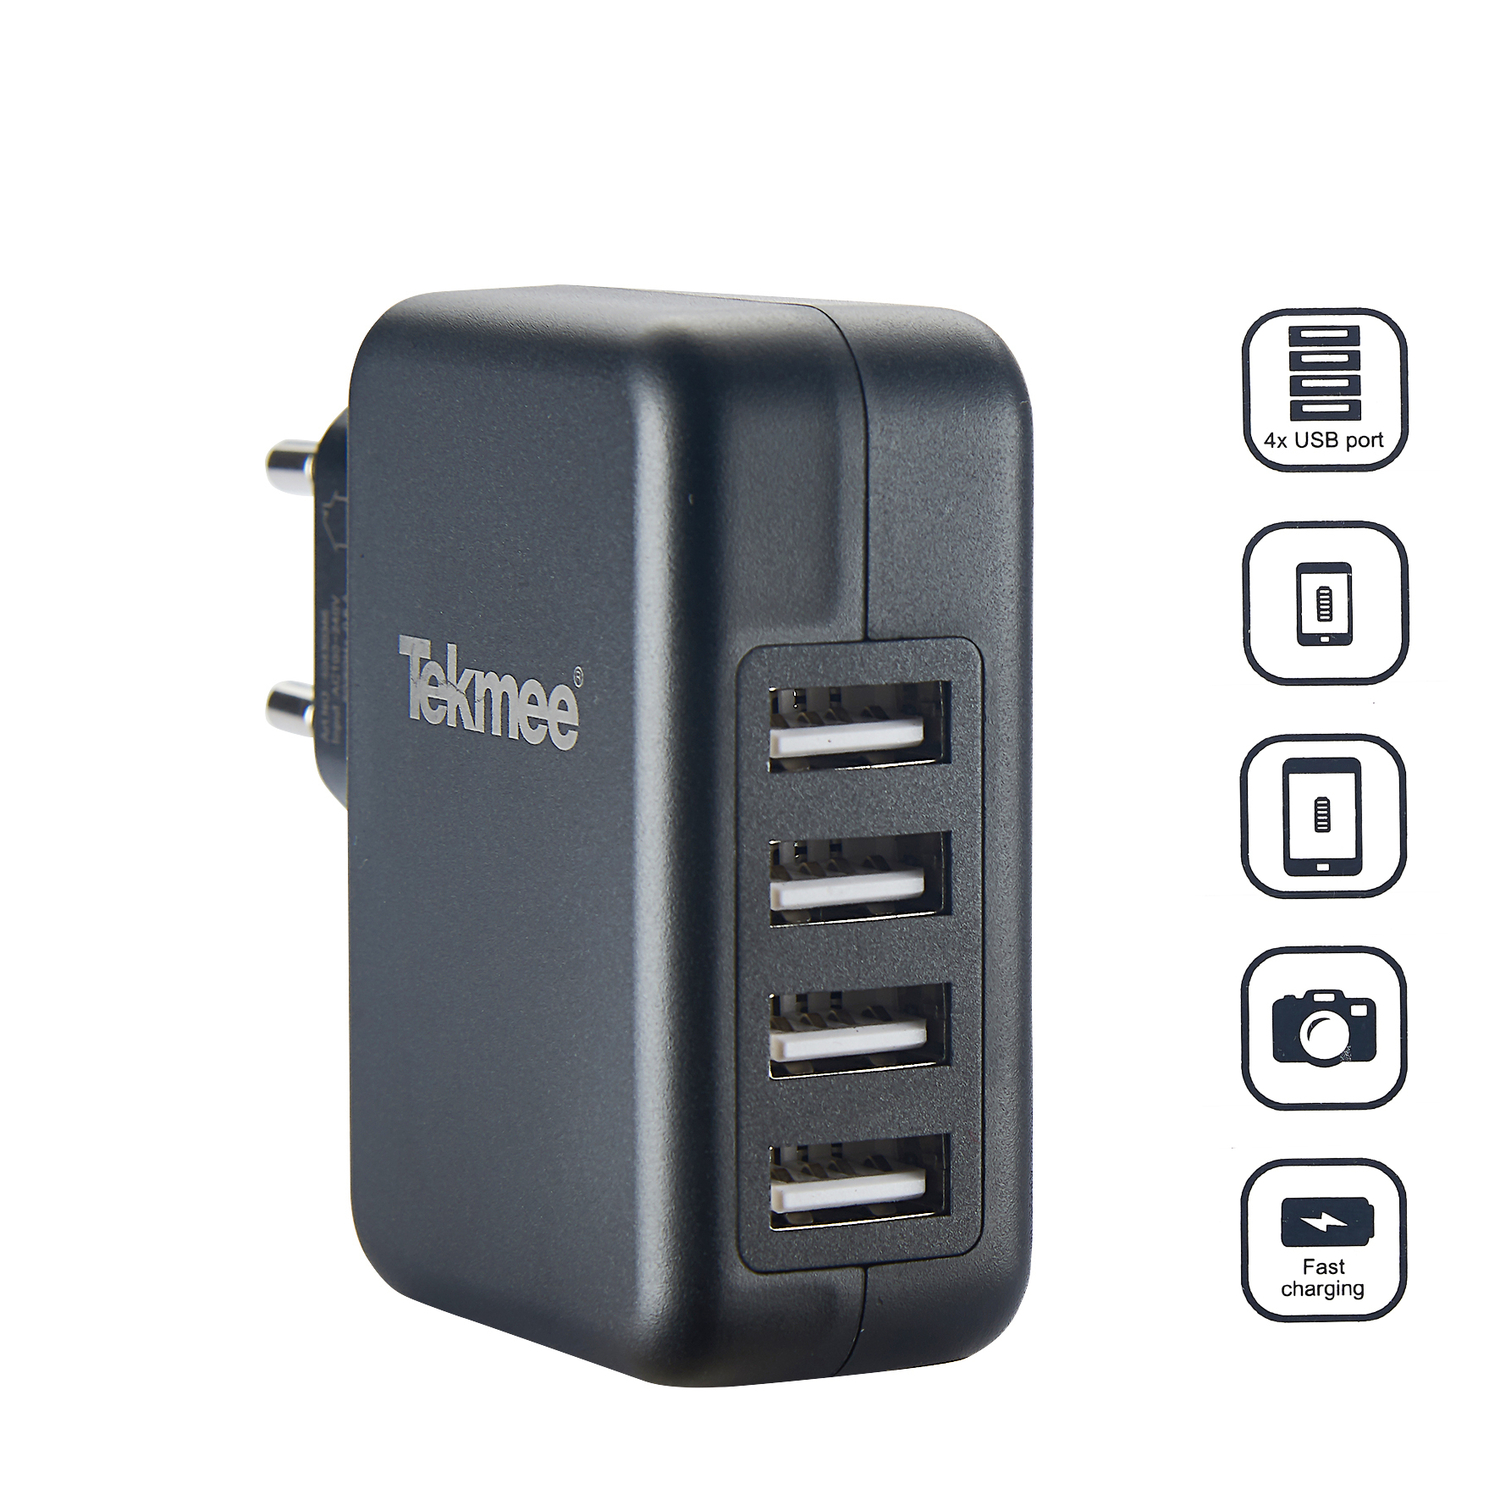 Tekmee Wall Plug USB-A 4 ports